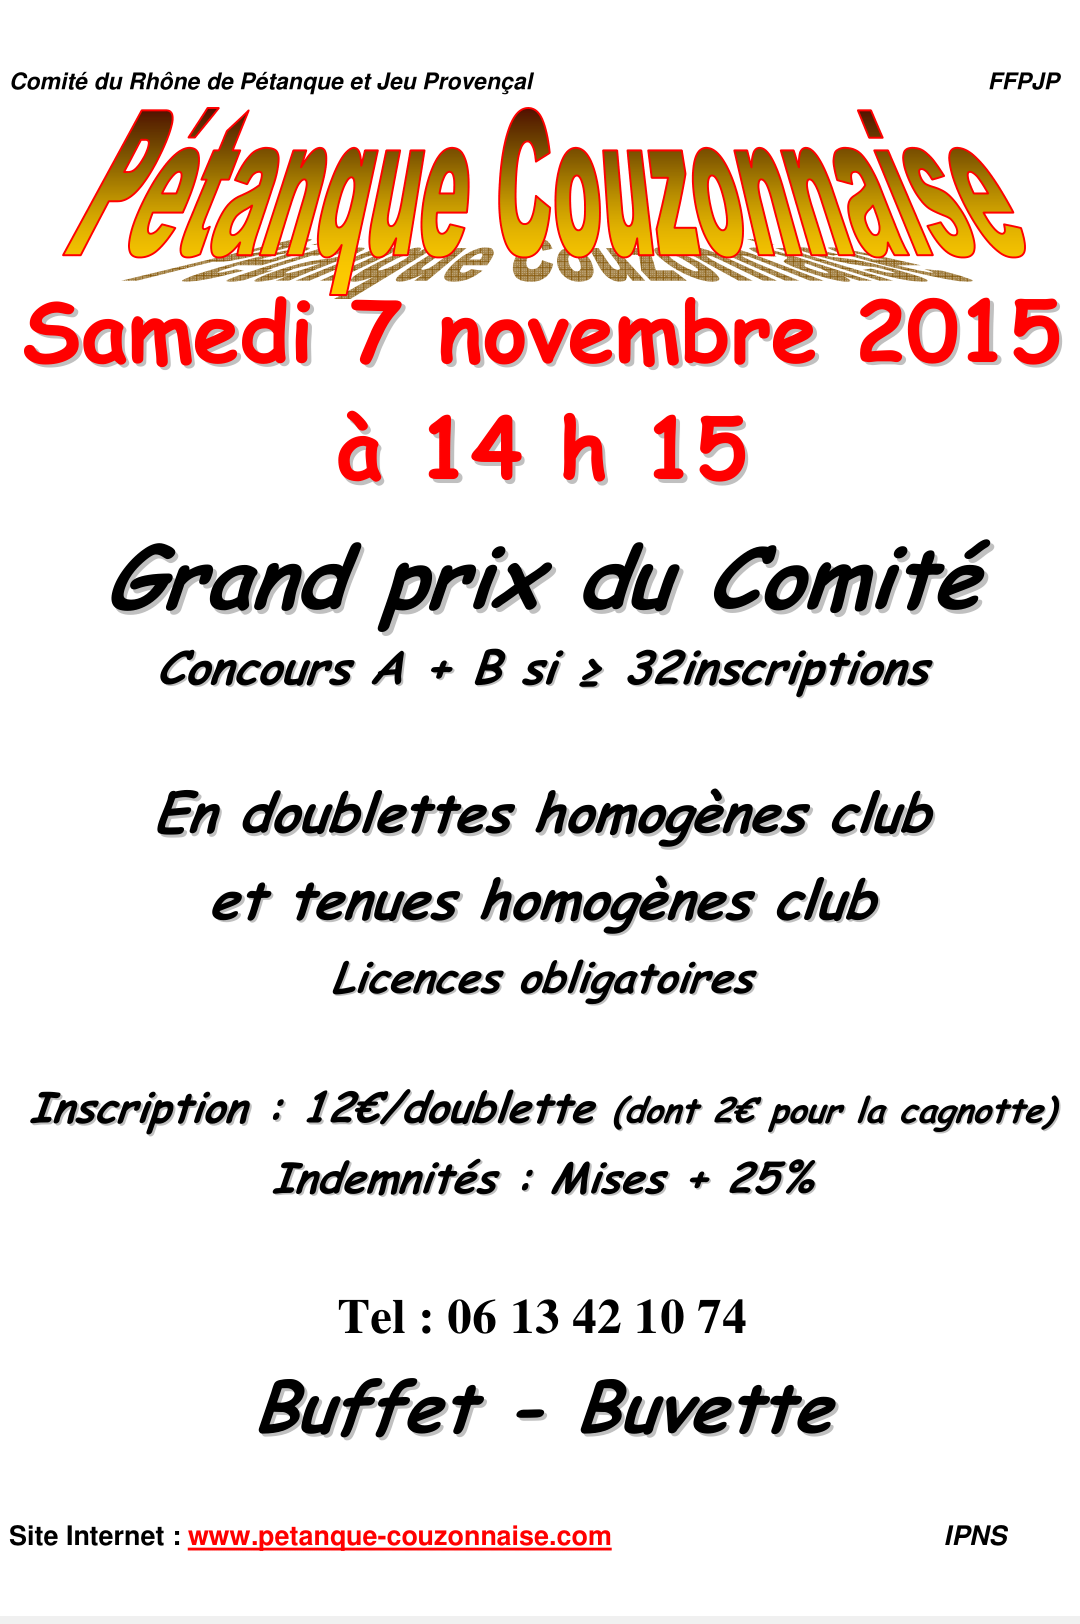 Concours GPCom à Couzon le samedi  7 Novembre 2015